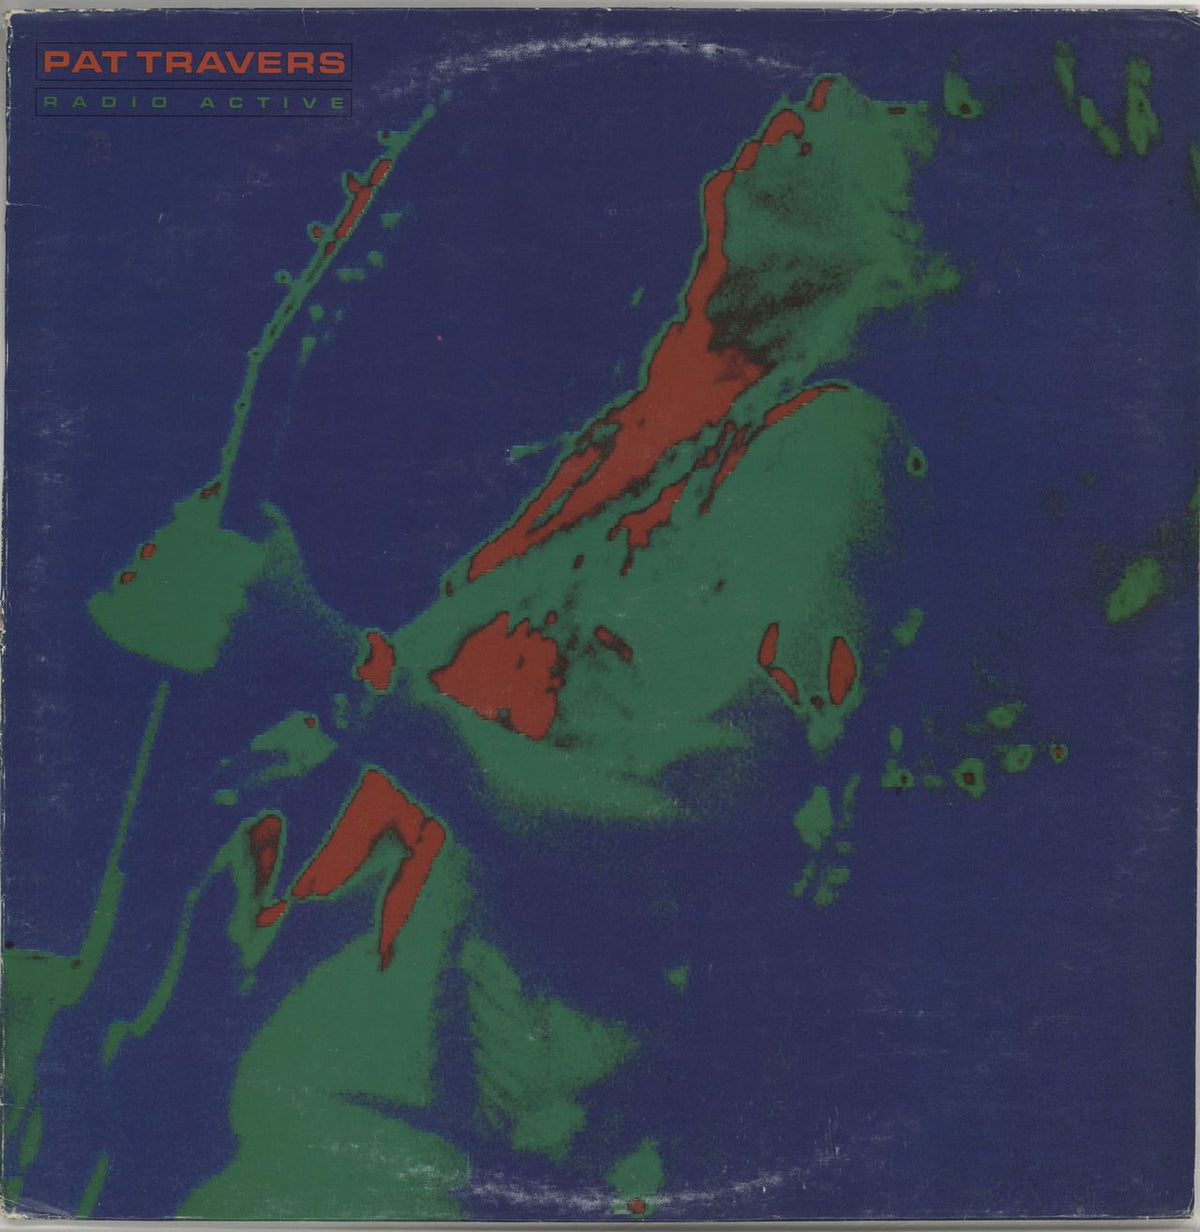 Pat Travers Radio Active Australian Vinyl LP — 